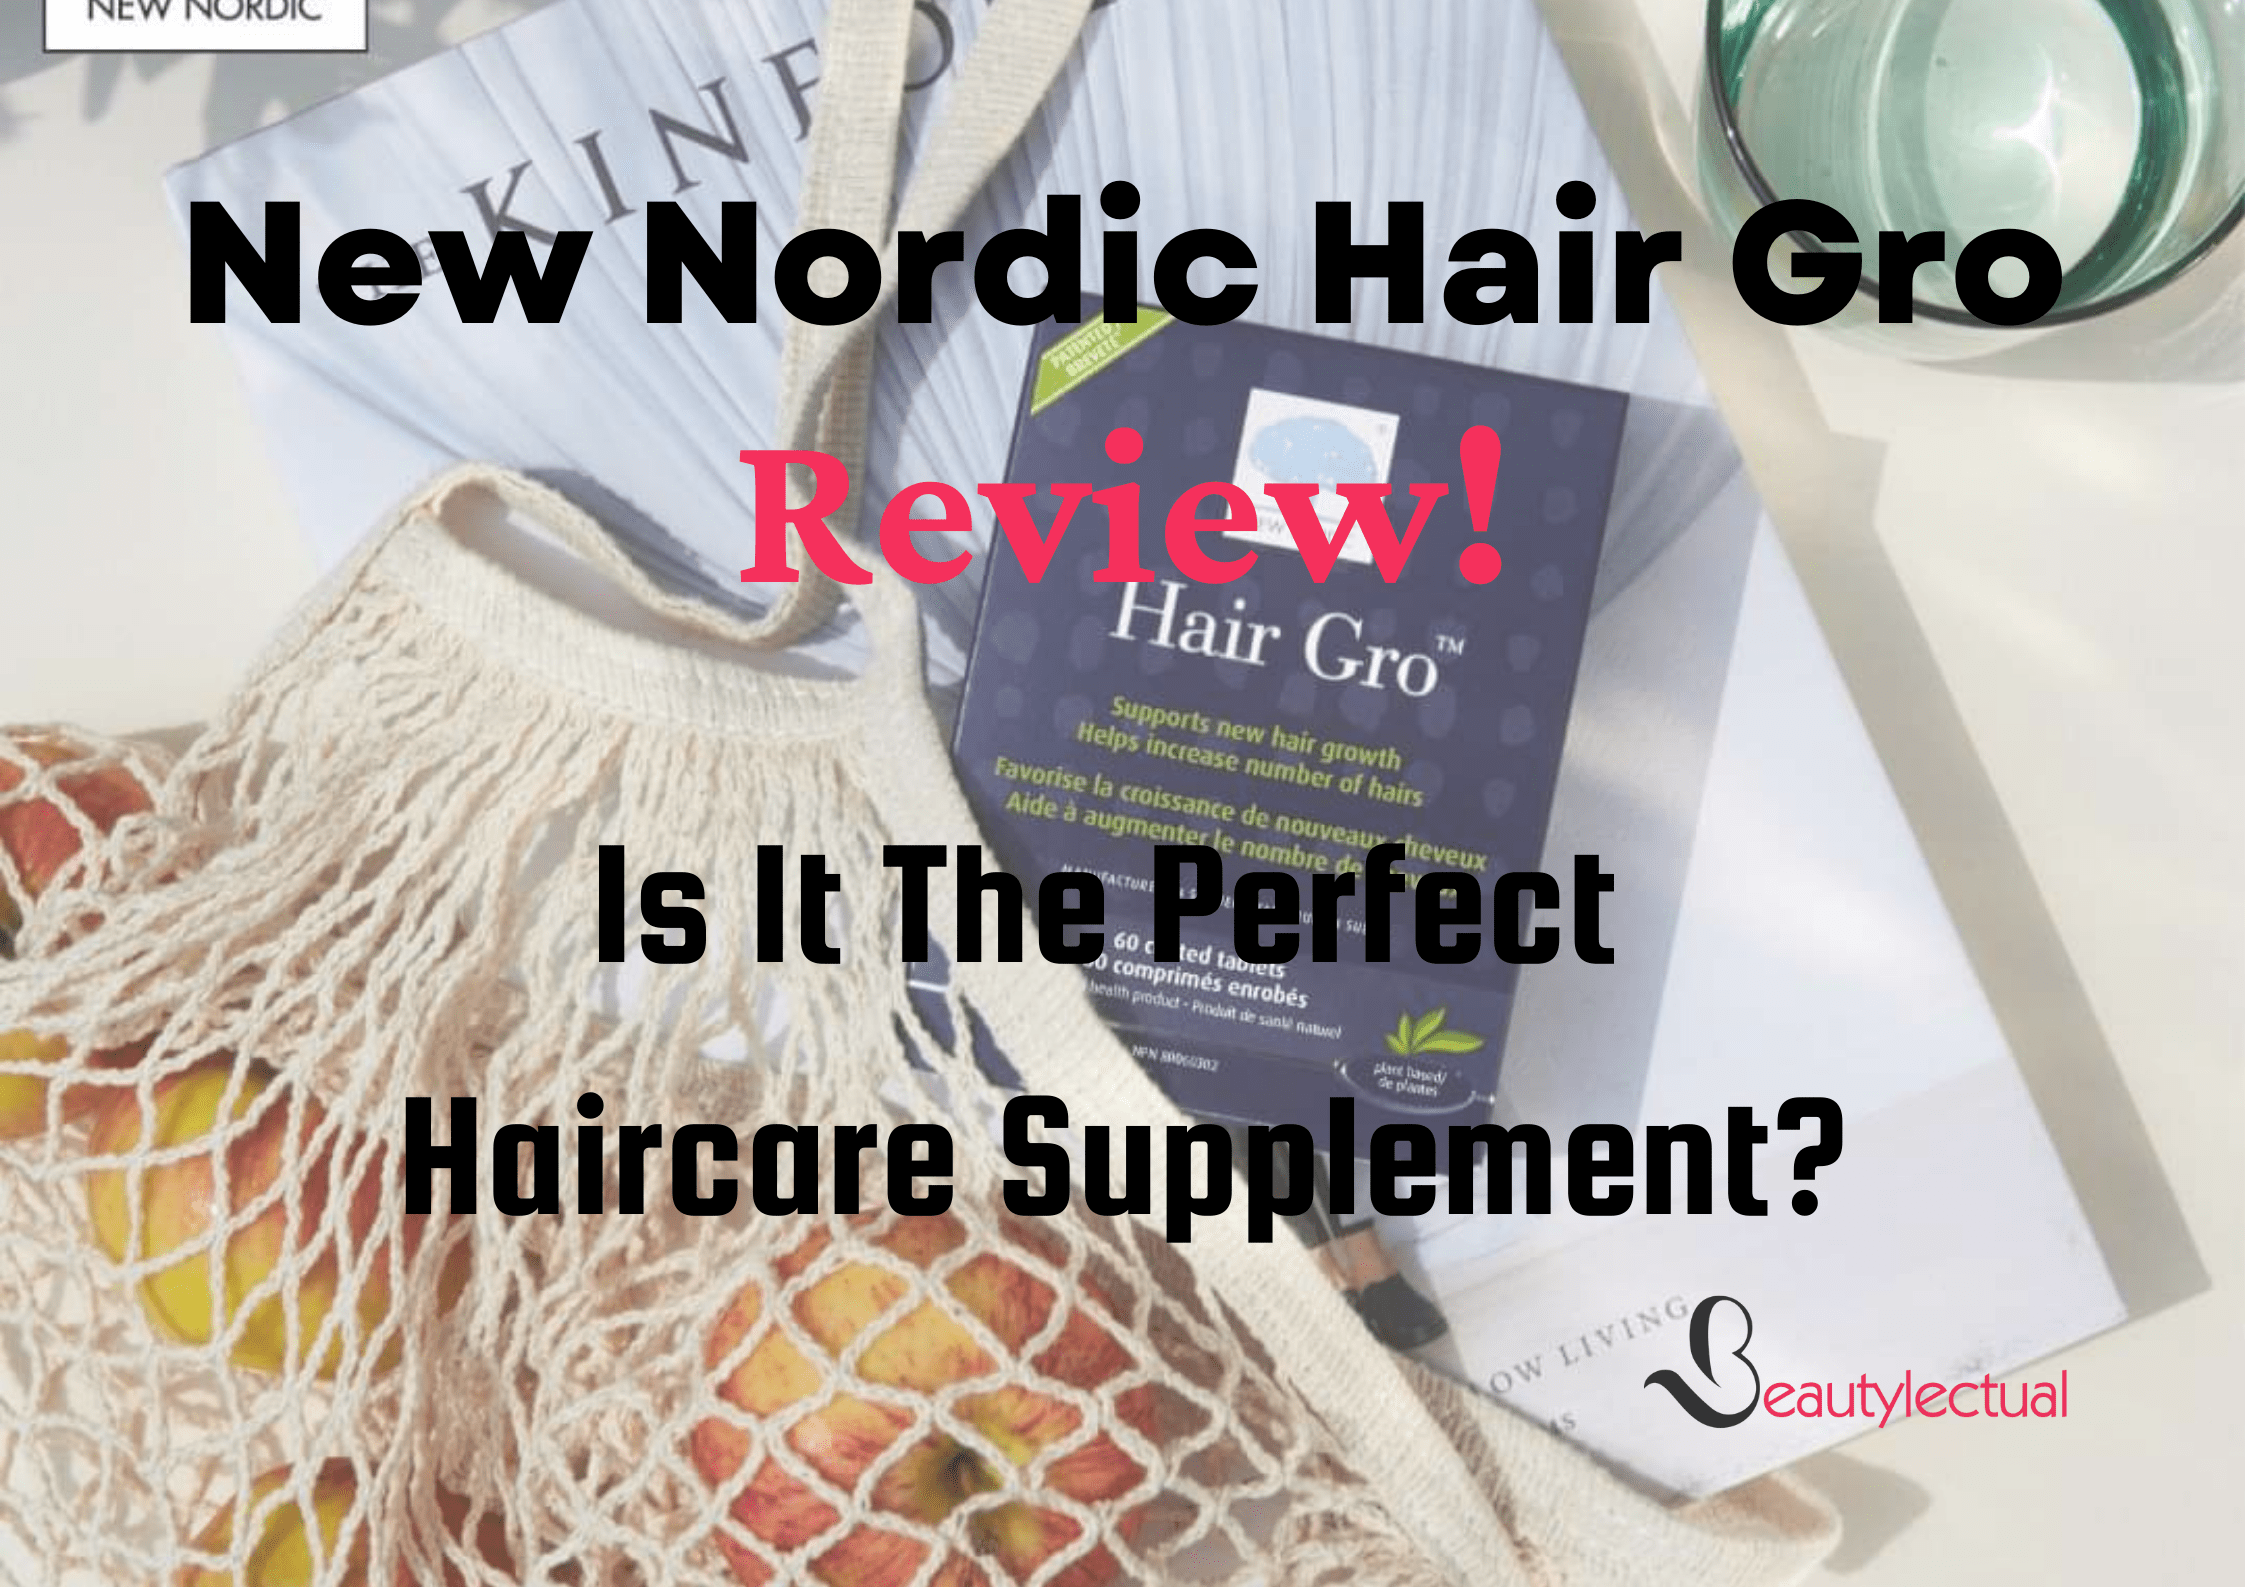 New Nordic Hair Gro Reviews